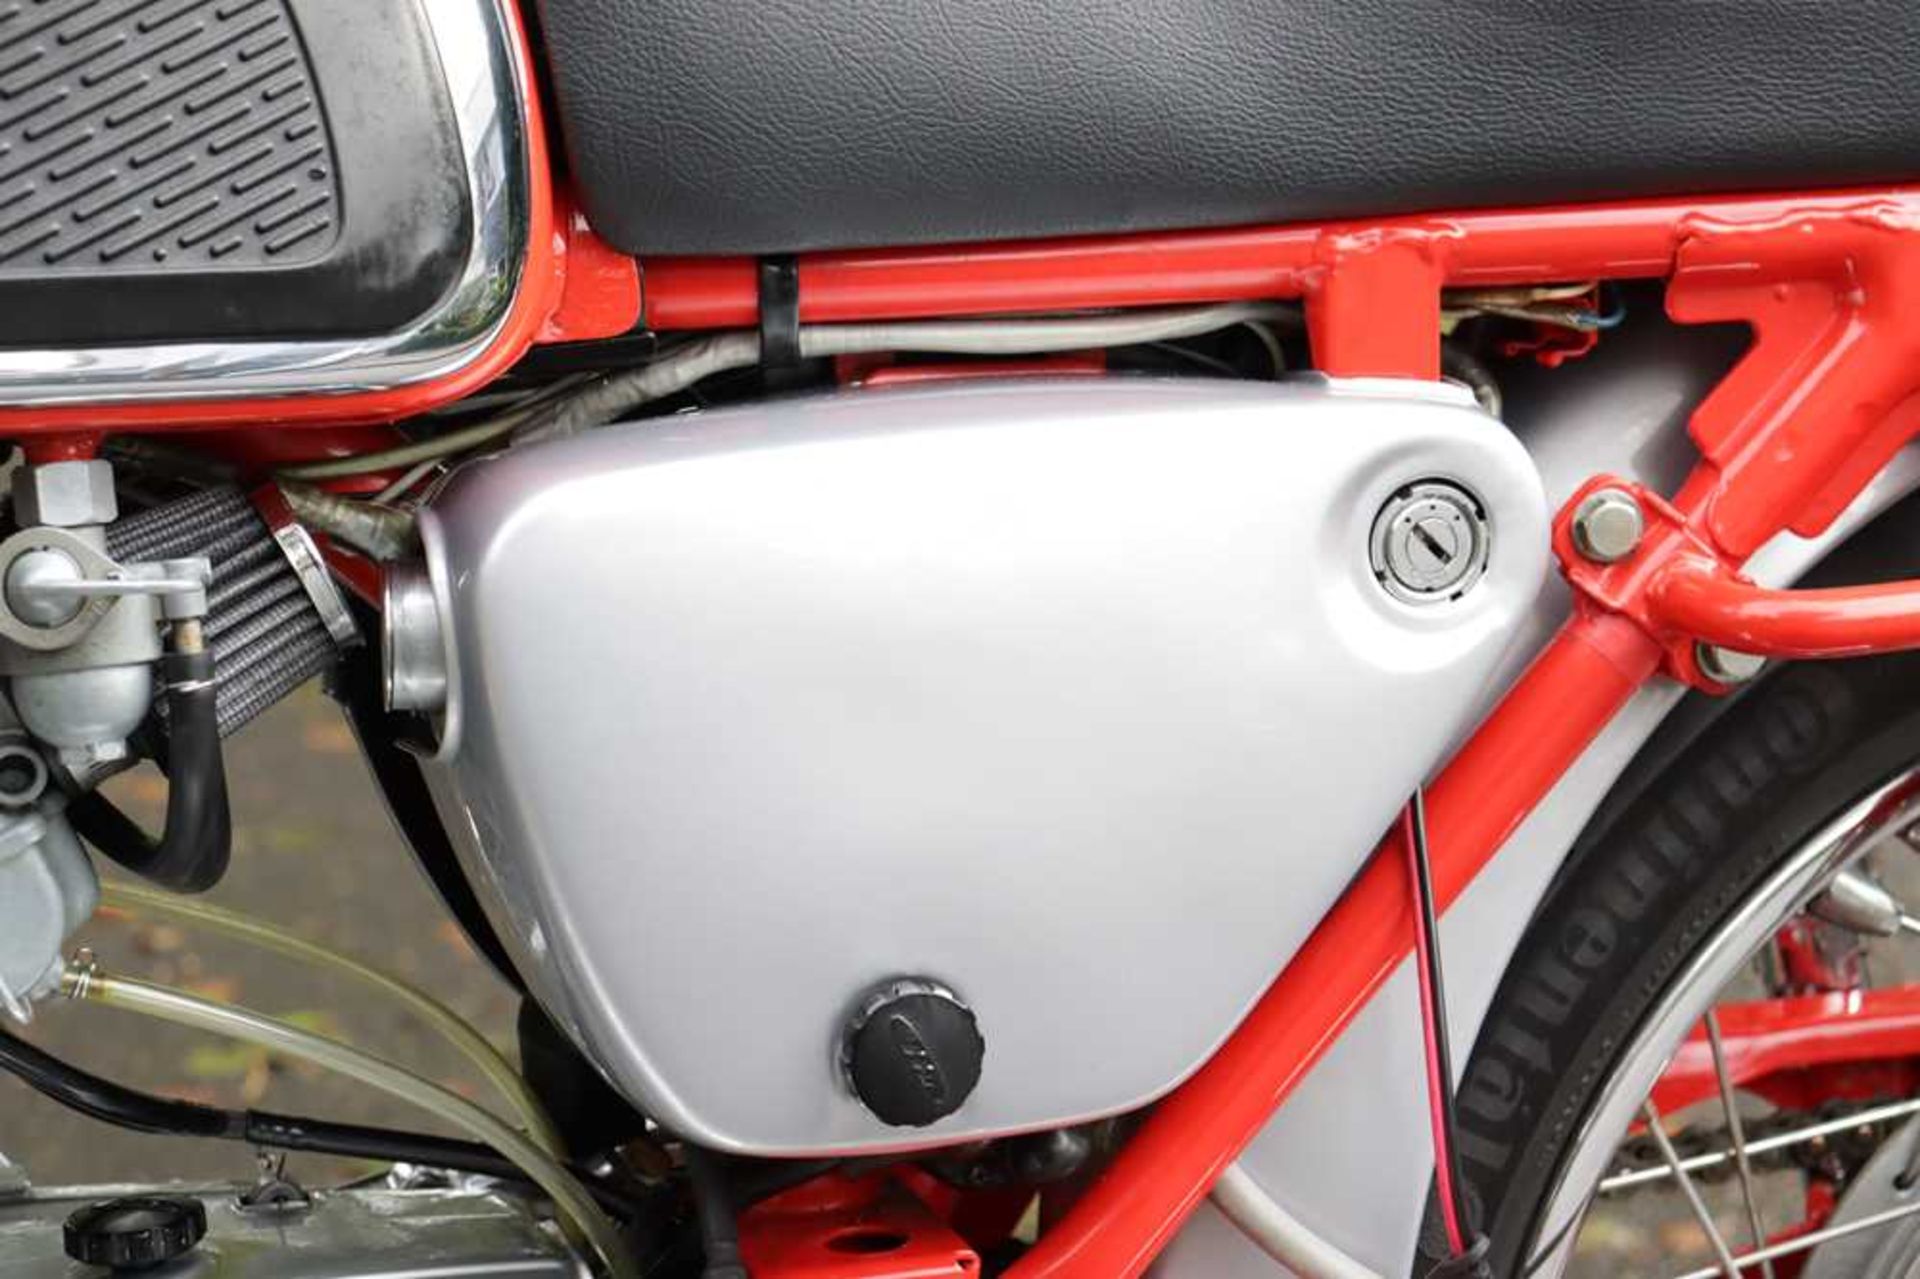 1966 Honda CB77 Restored to a high standard - Image 53 of 65